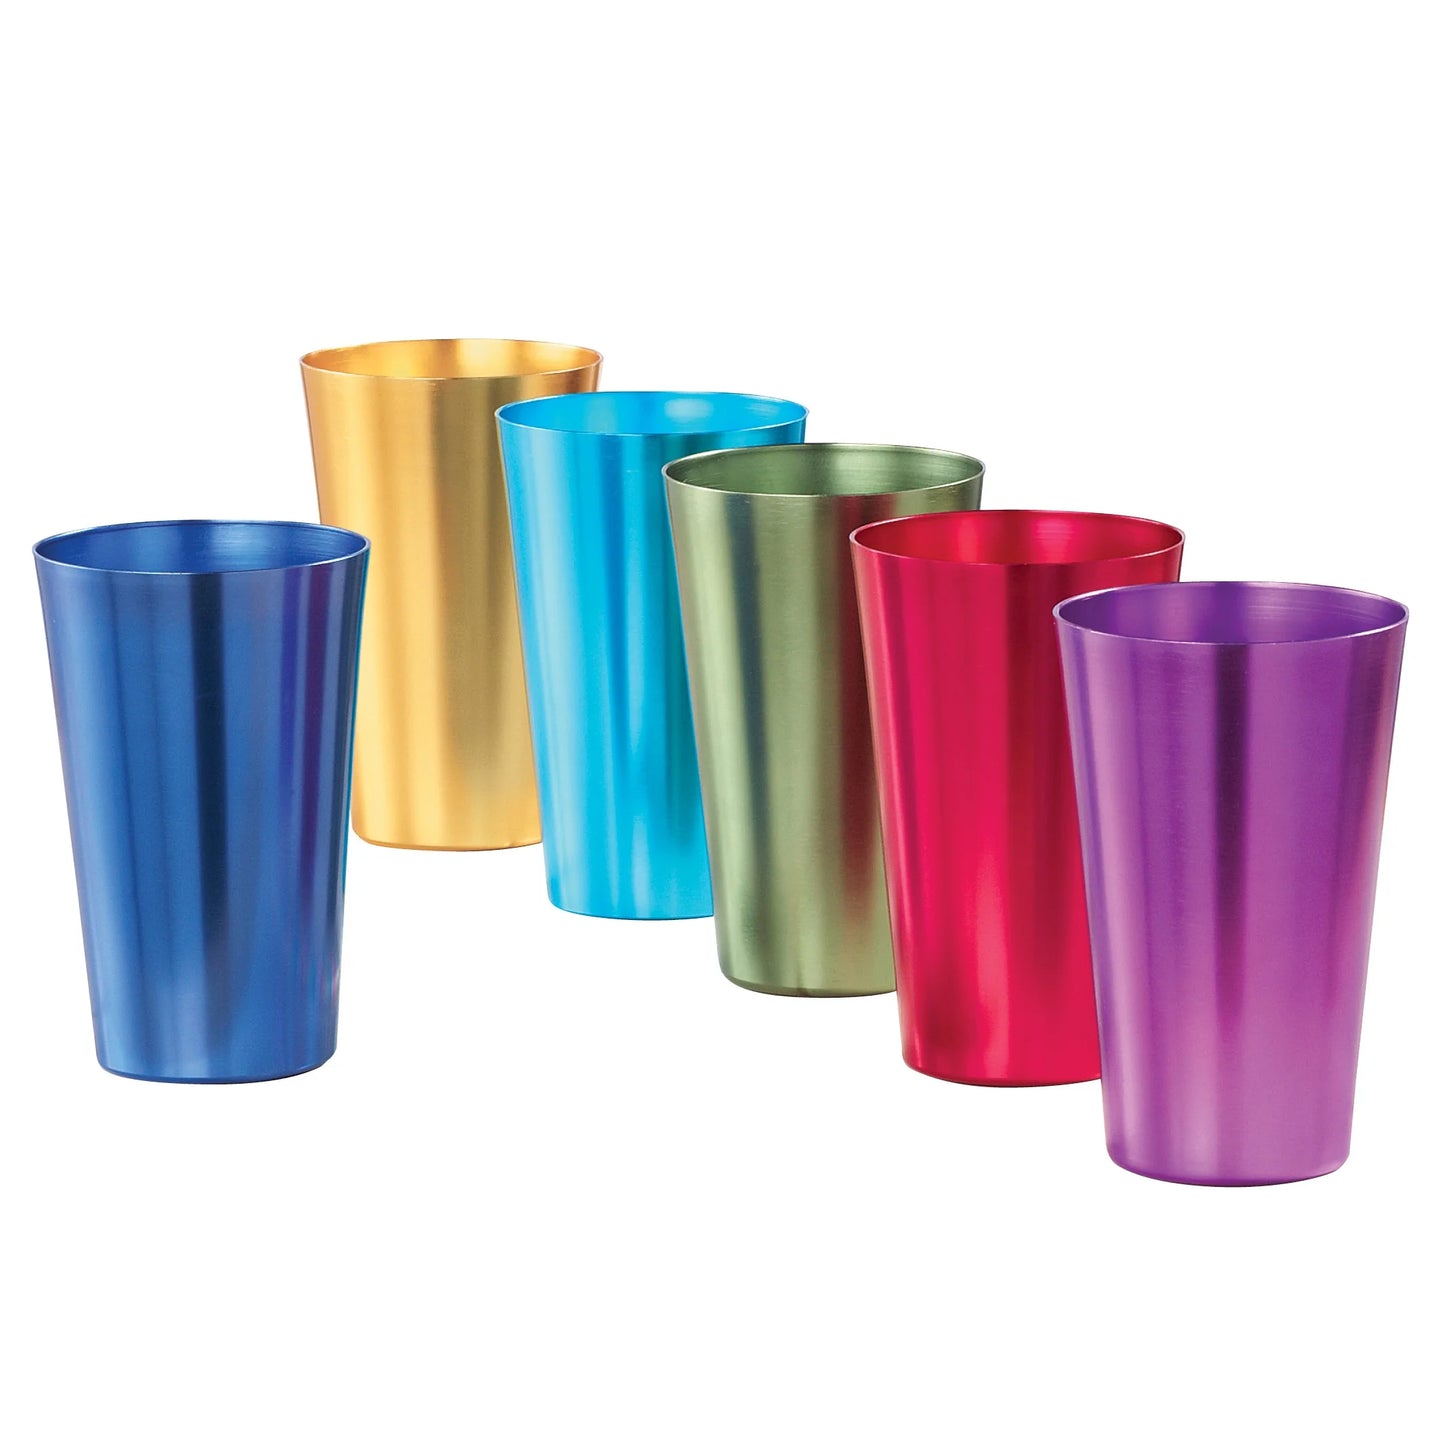 Colorful Retro Style Aluminum Rainbow Tumblers - Set of 6 - 4.13 X 3.15